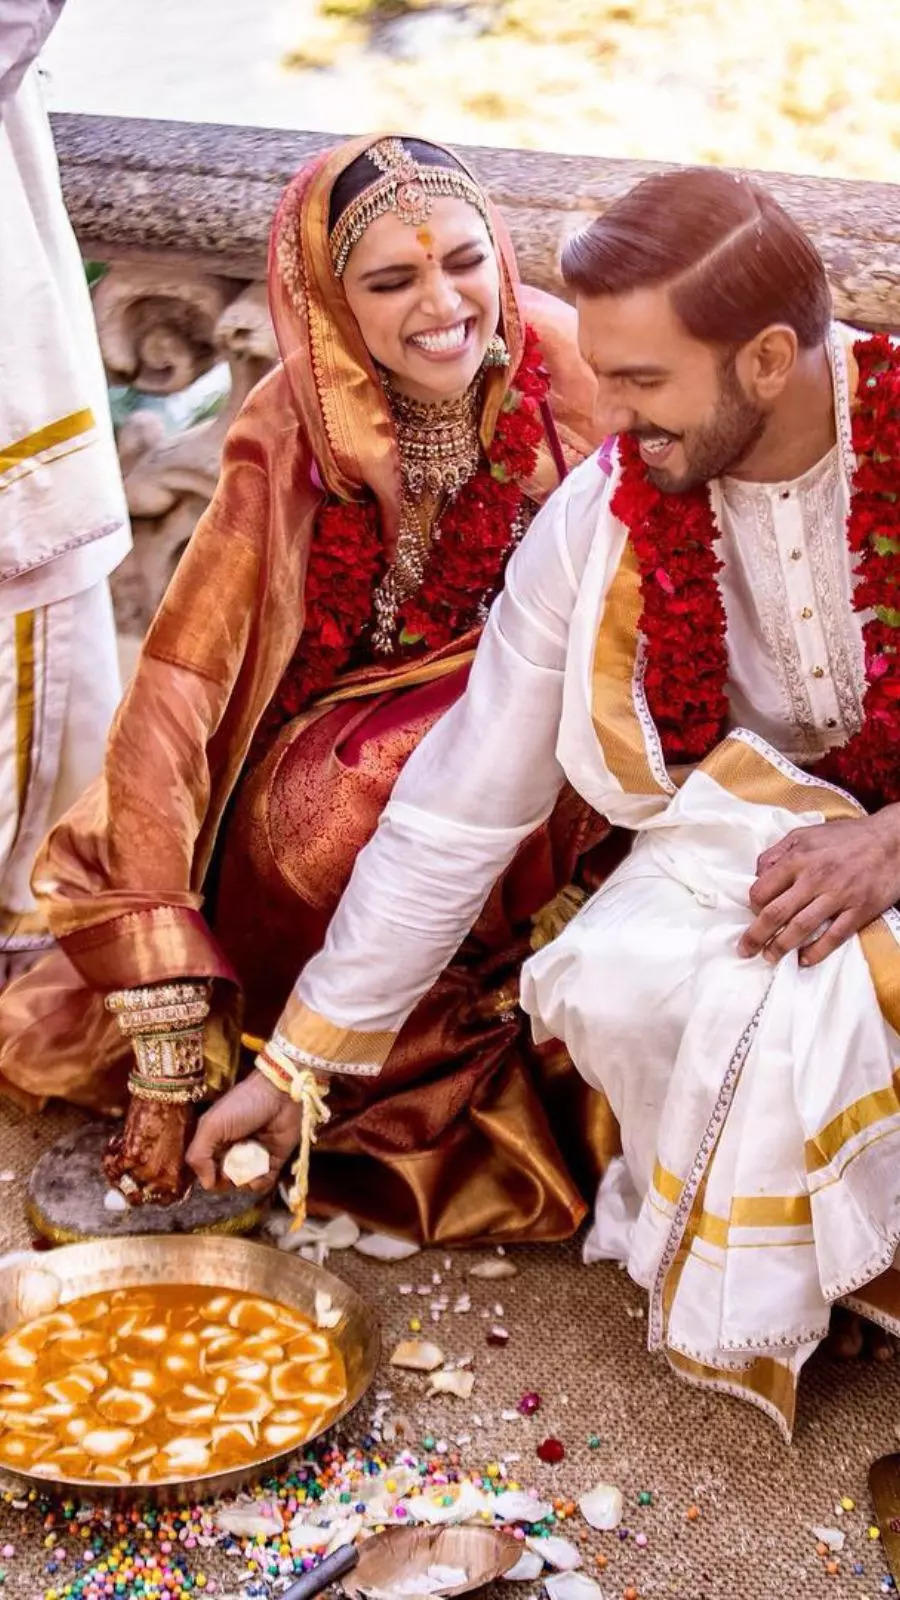 Throwback To The Making Of Deepika Padukone's Sabyasachi Wedding Lehenga  #deepikapadukone #trending - YouTube